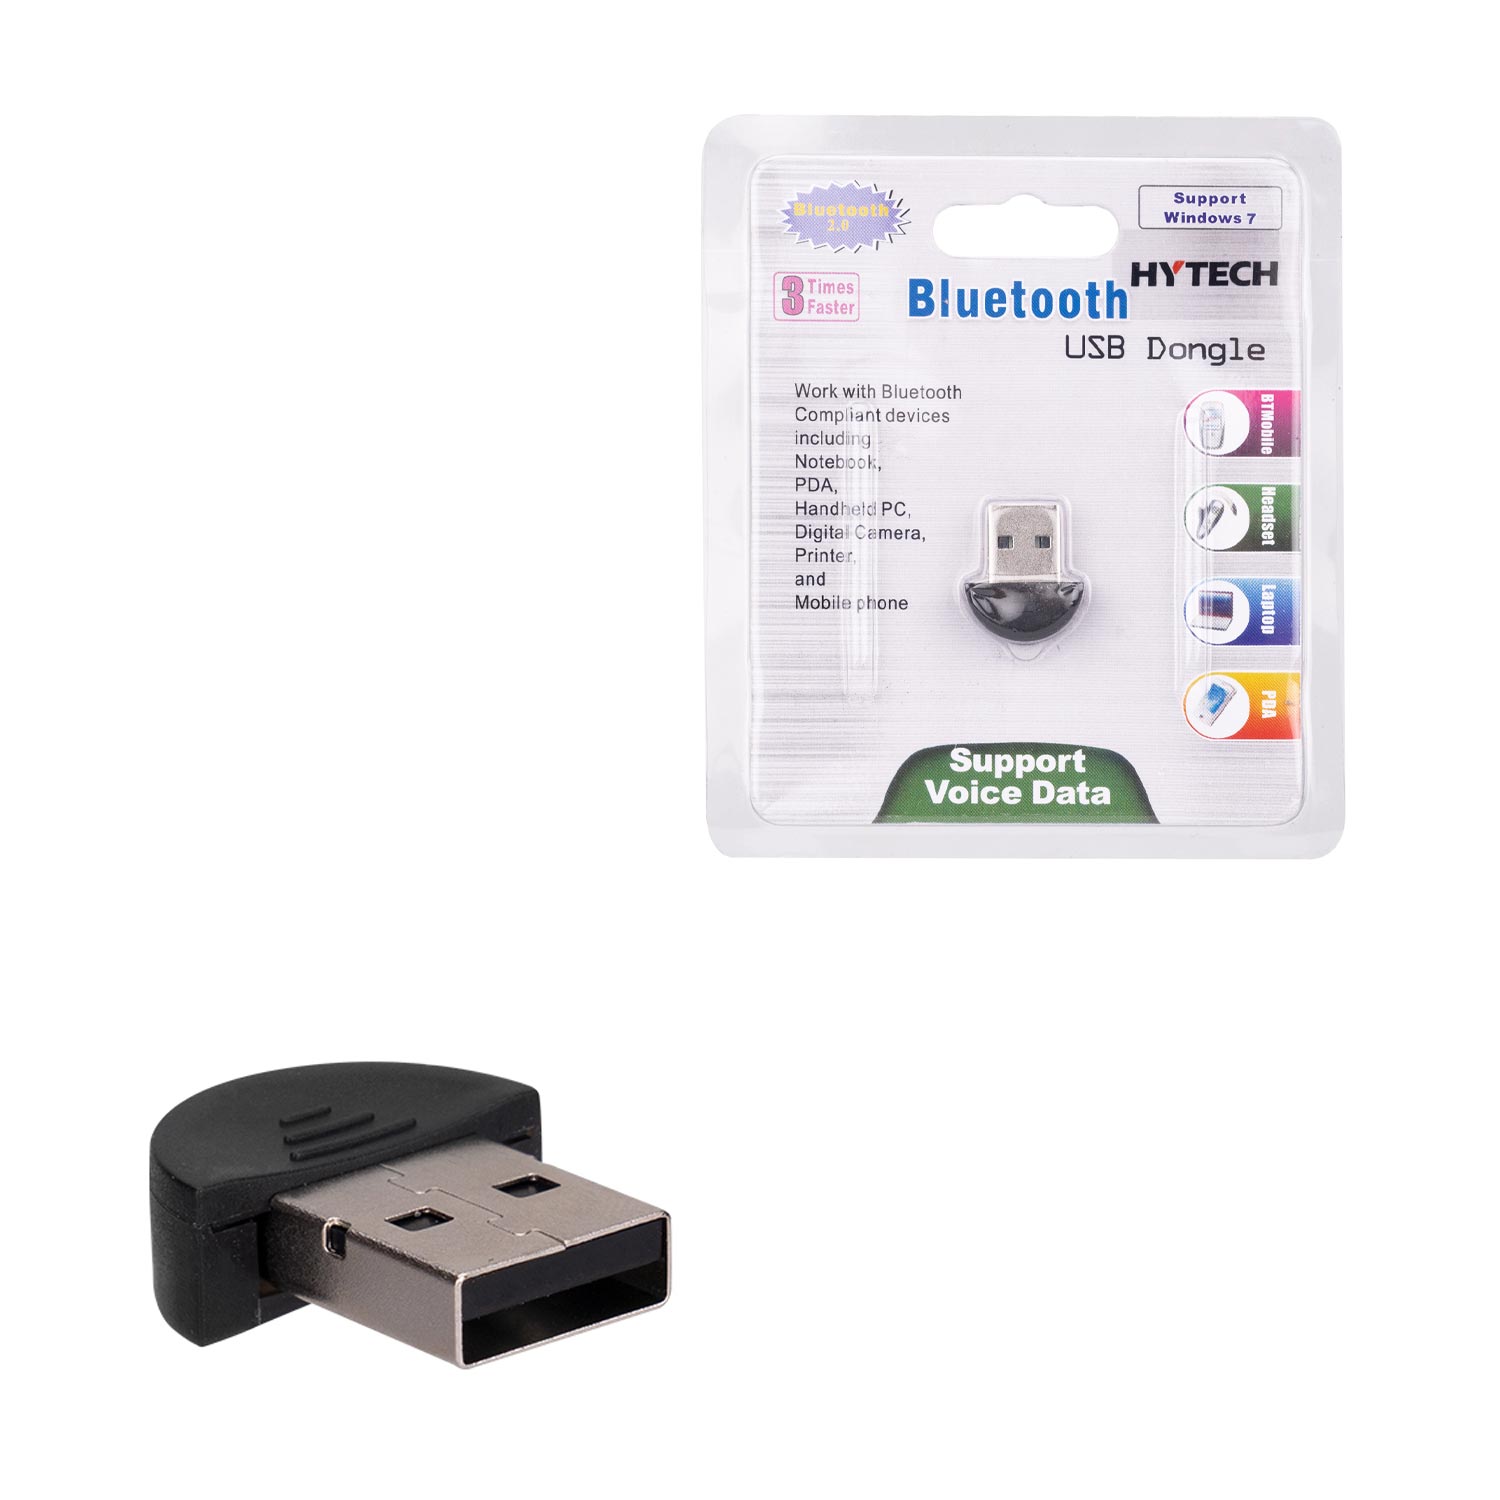 USB DONGLE BLUETOOTH 4.0 HYTECH HY-BL040